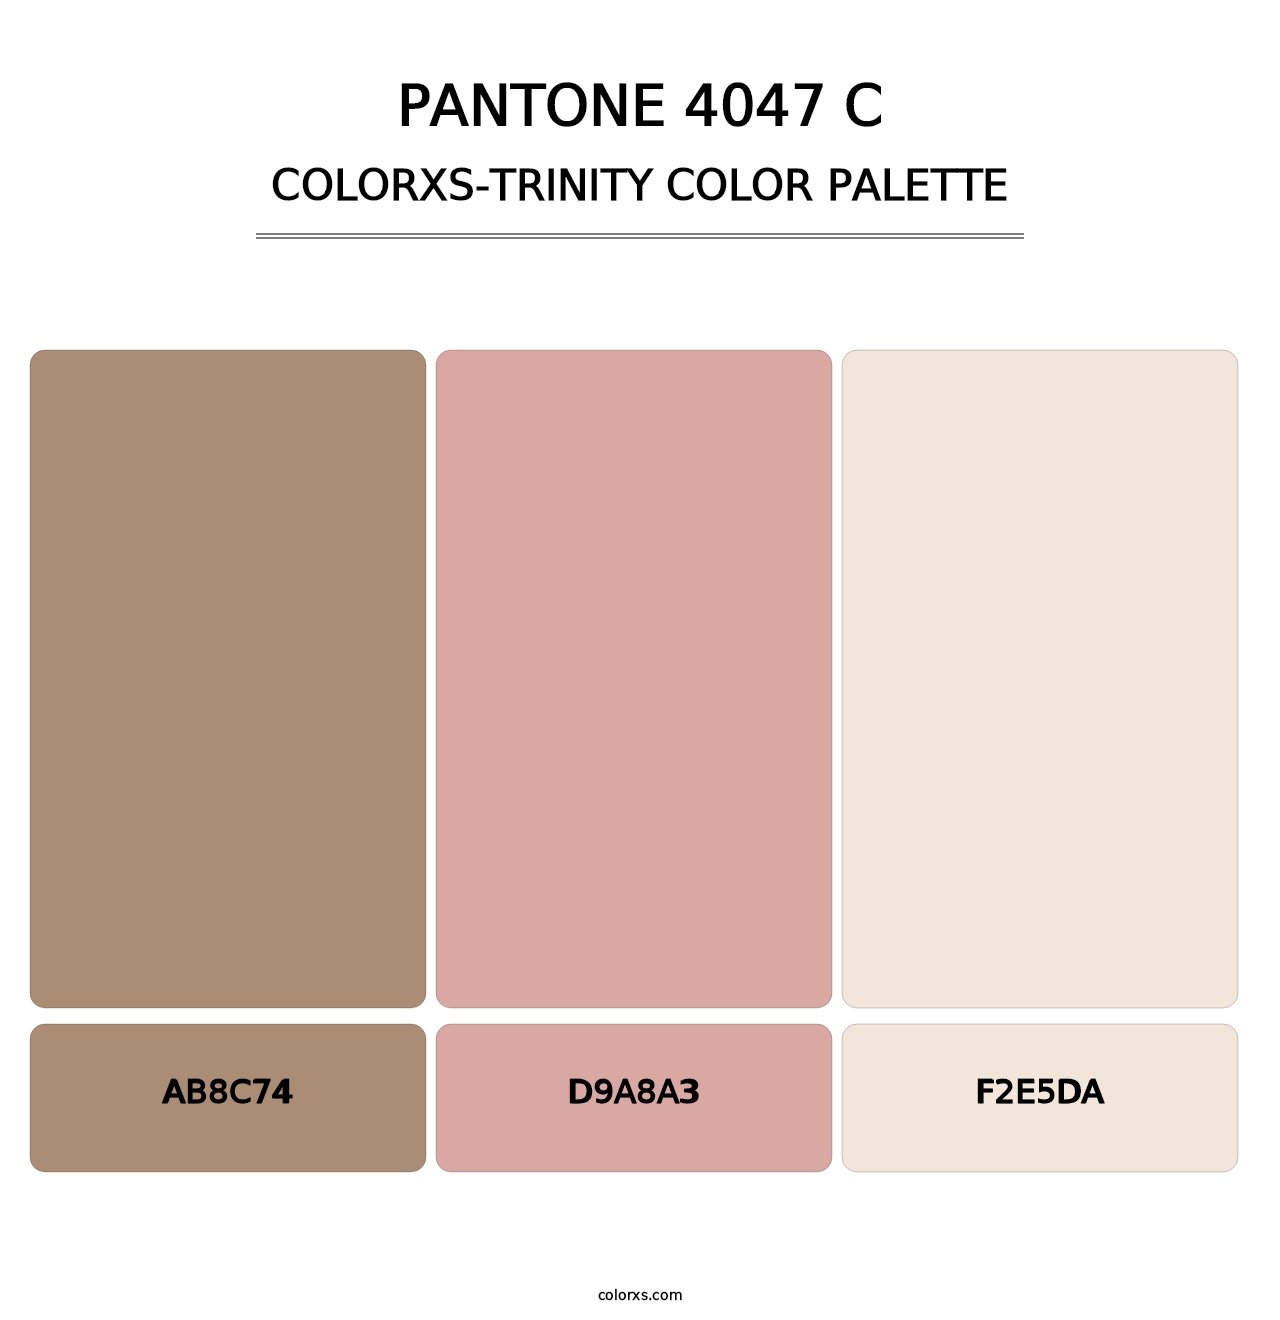 PANTONE 4047 C - Colorxs Trinity Palette